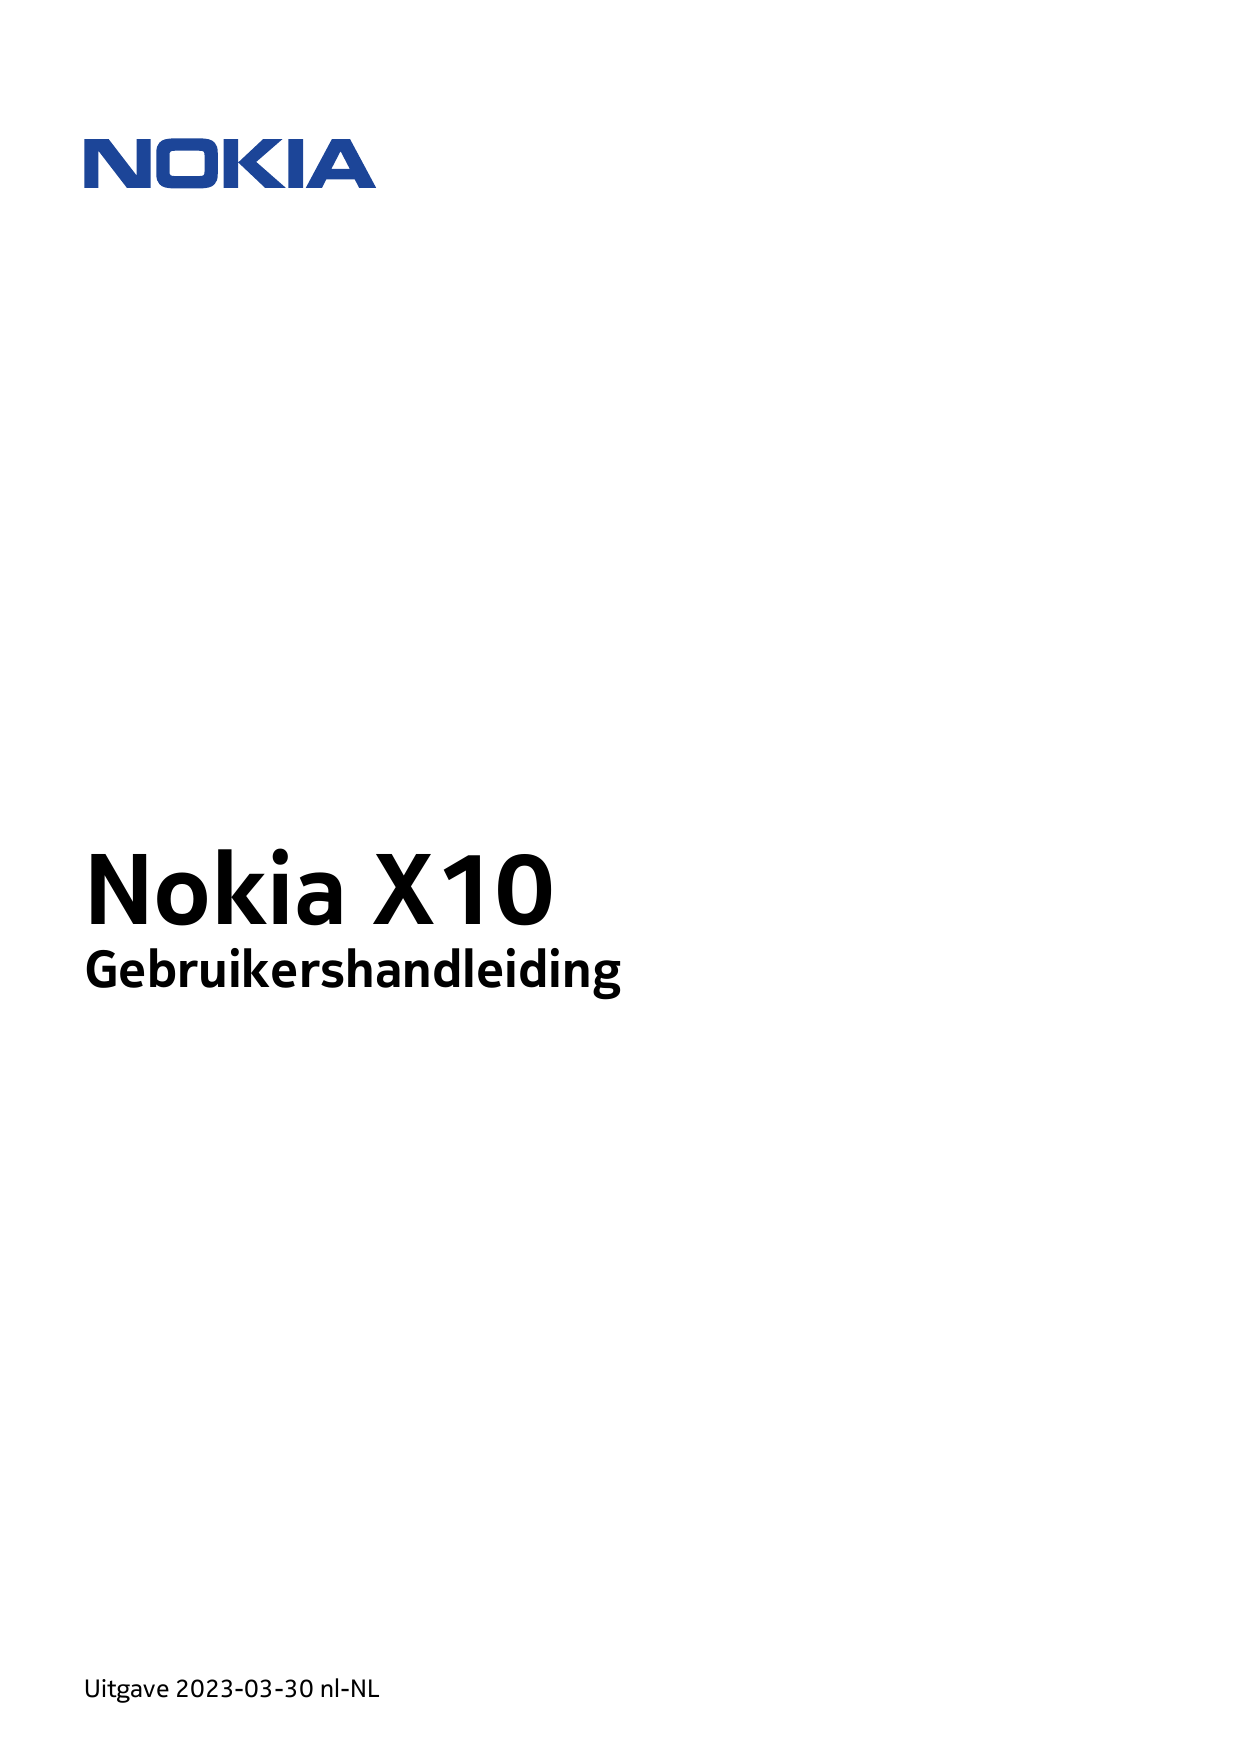 Nokia X10GebruikershandleidingUitgave 2023-03-30 nl-NL